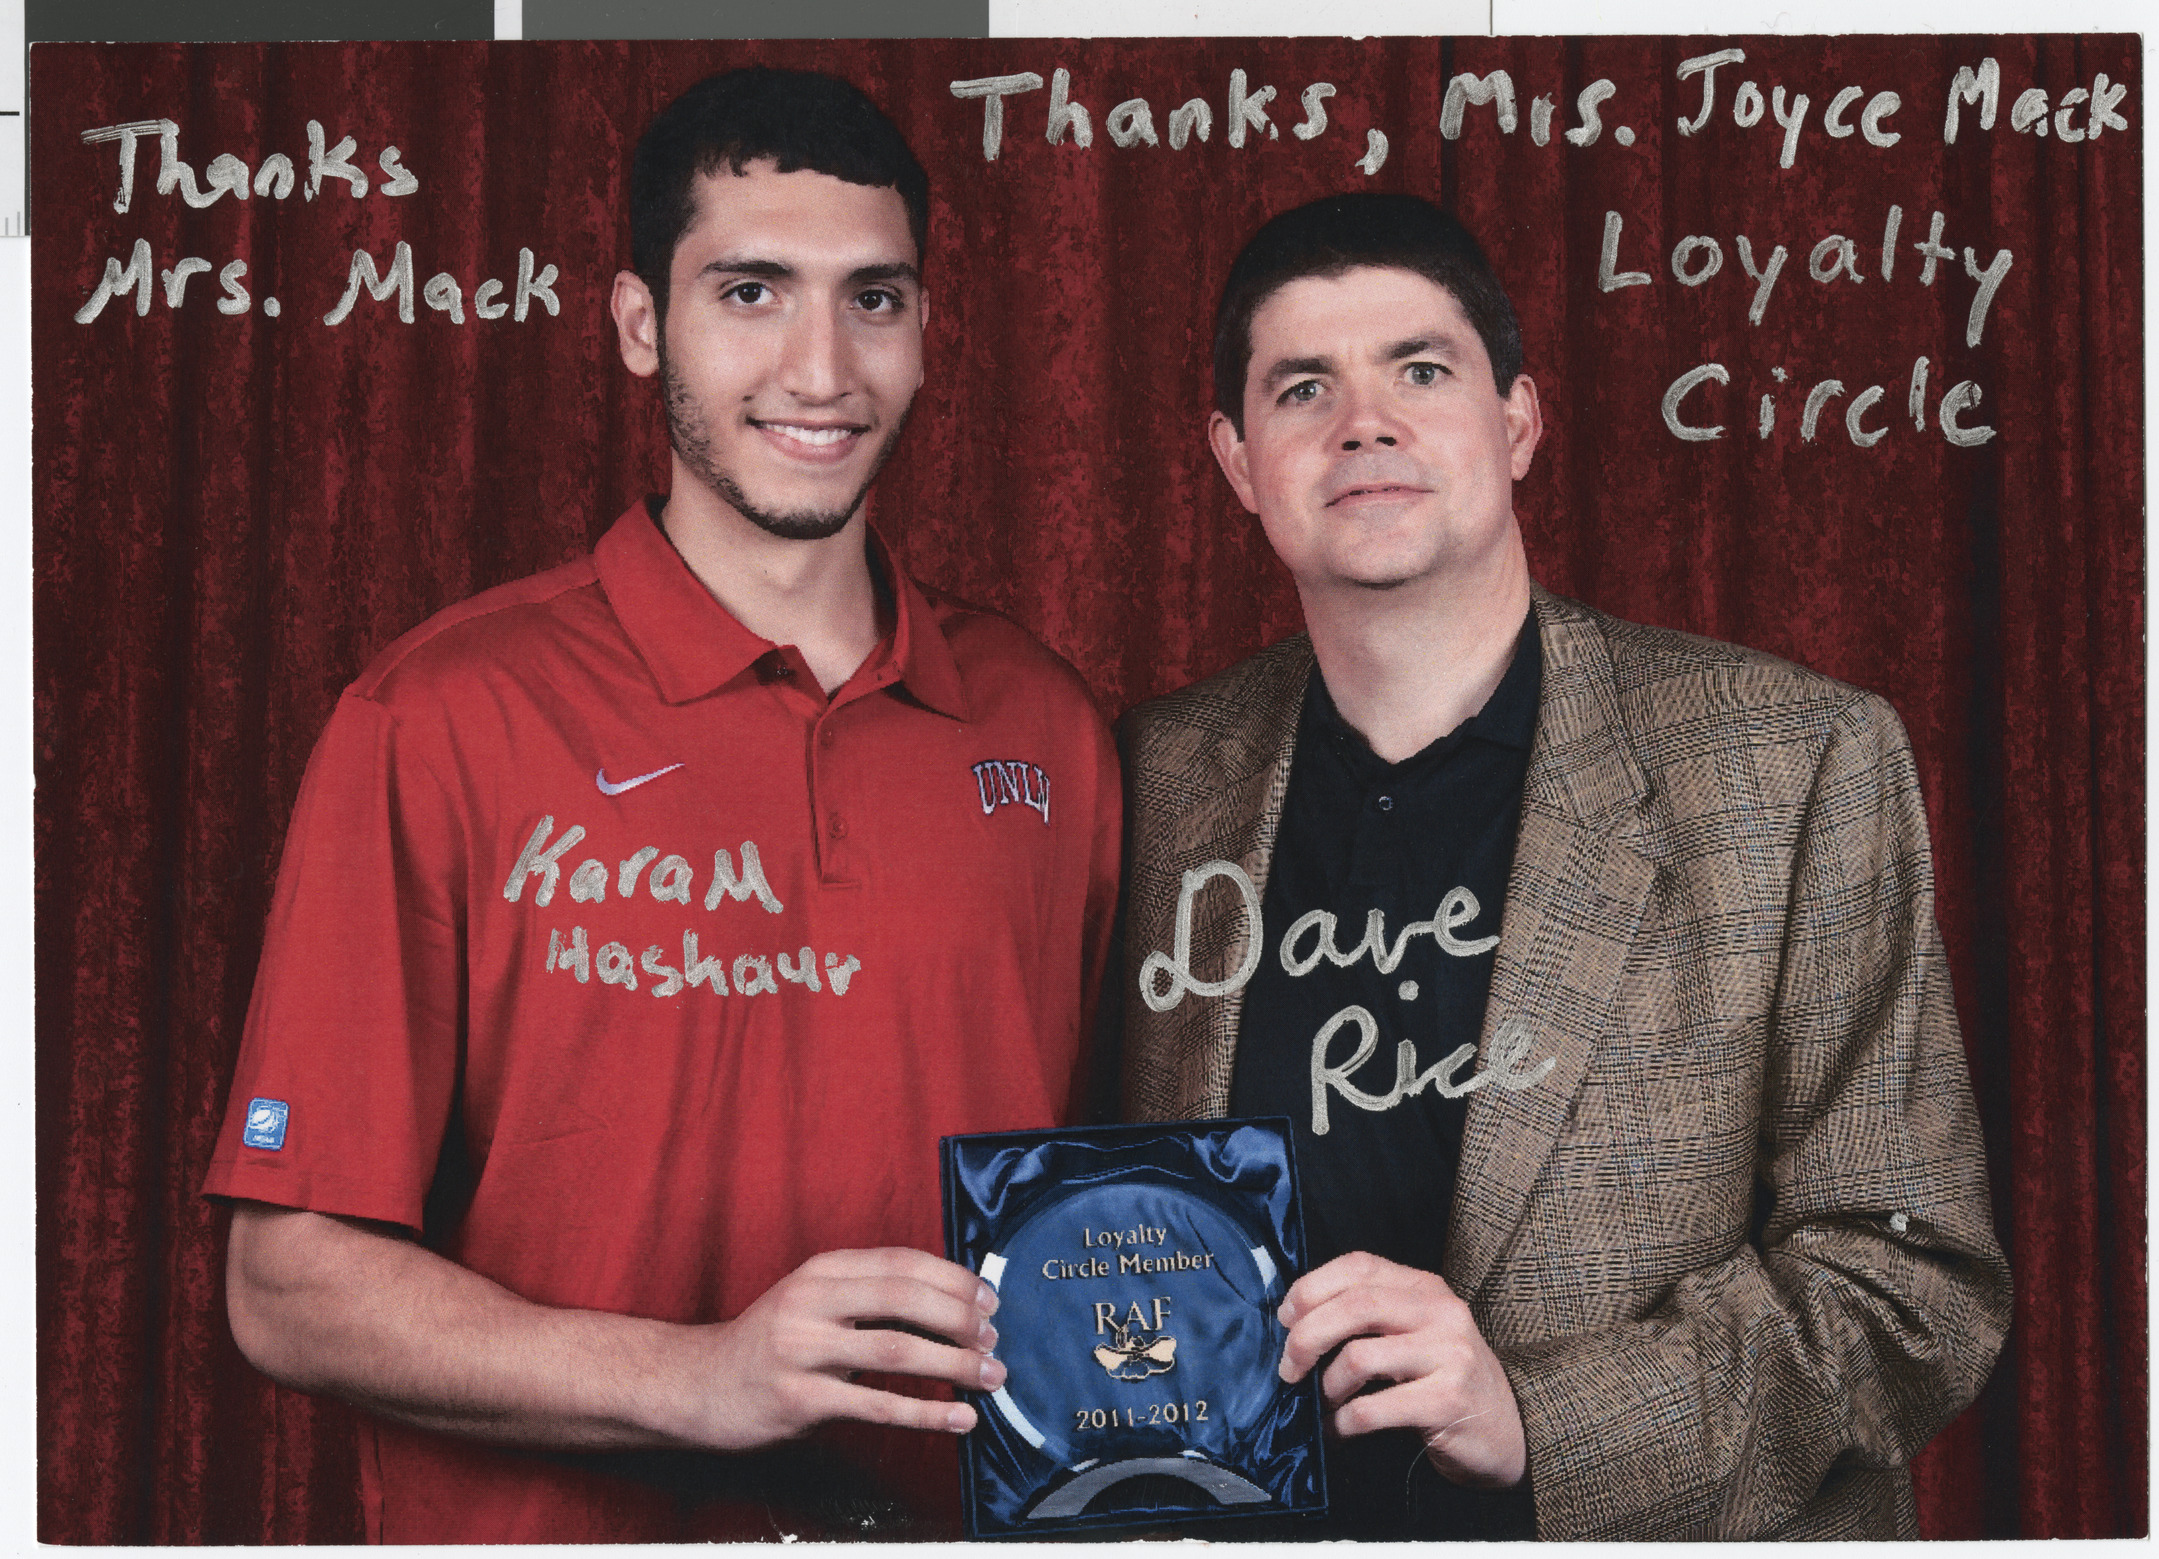 Autographed photograph of Karam Mashour and Dave Rice of UNLV Basketball,